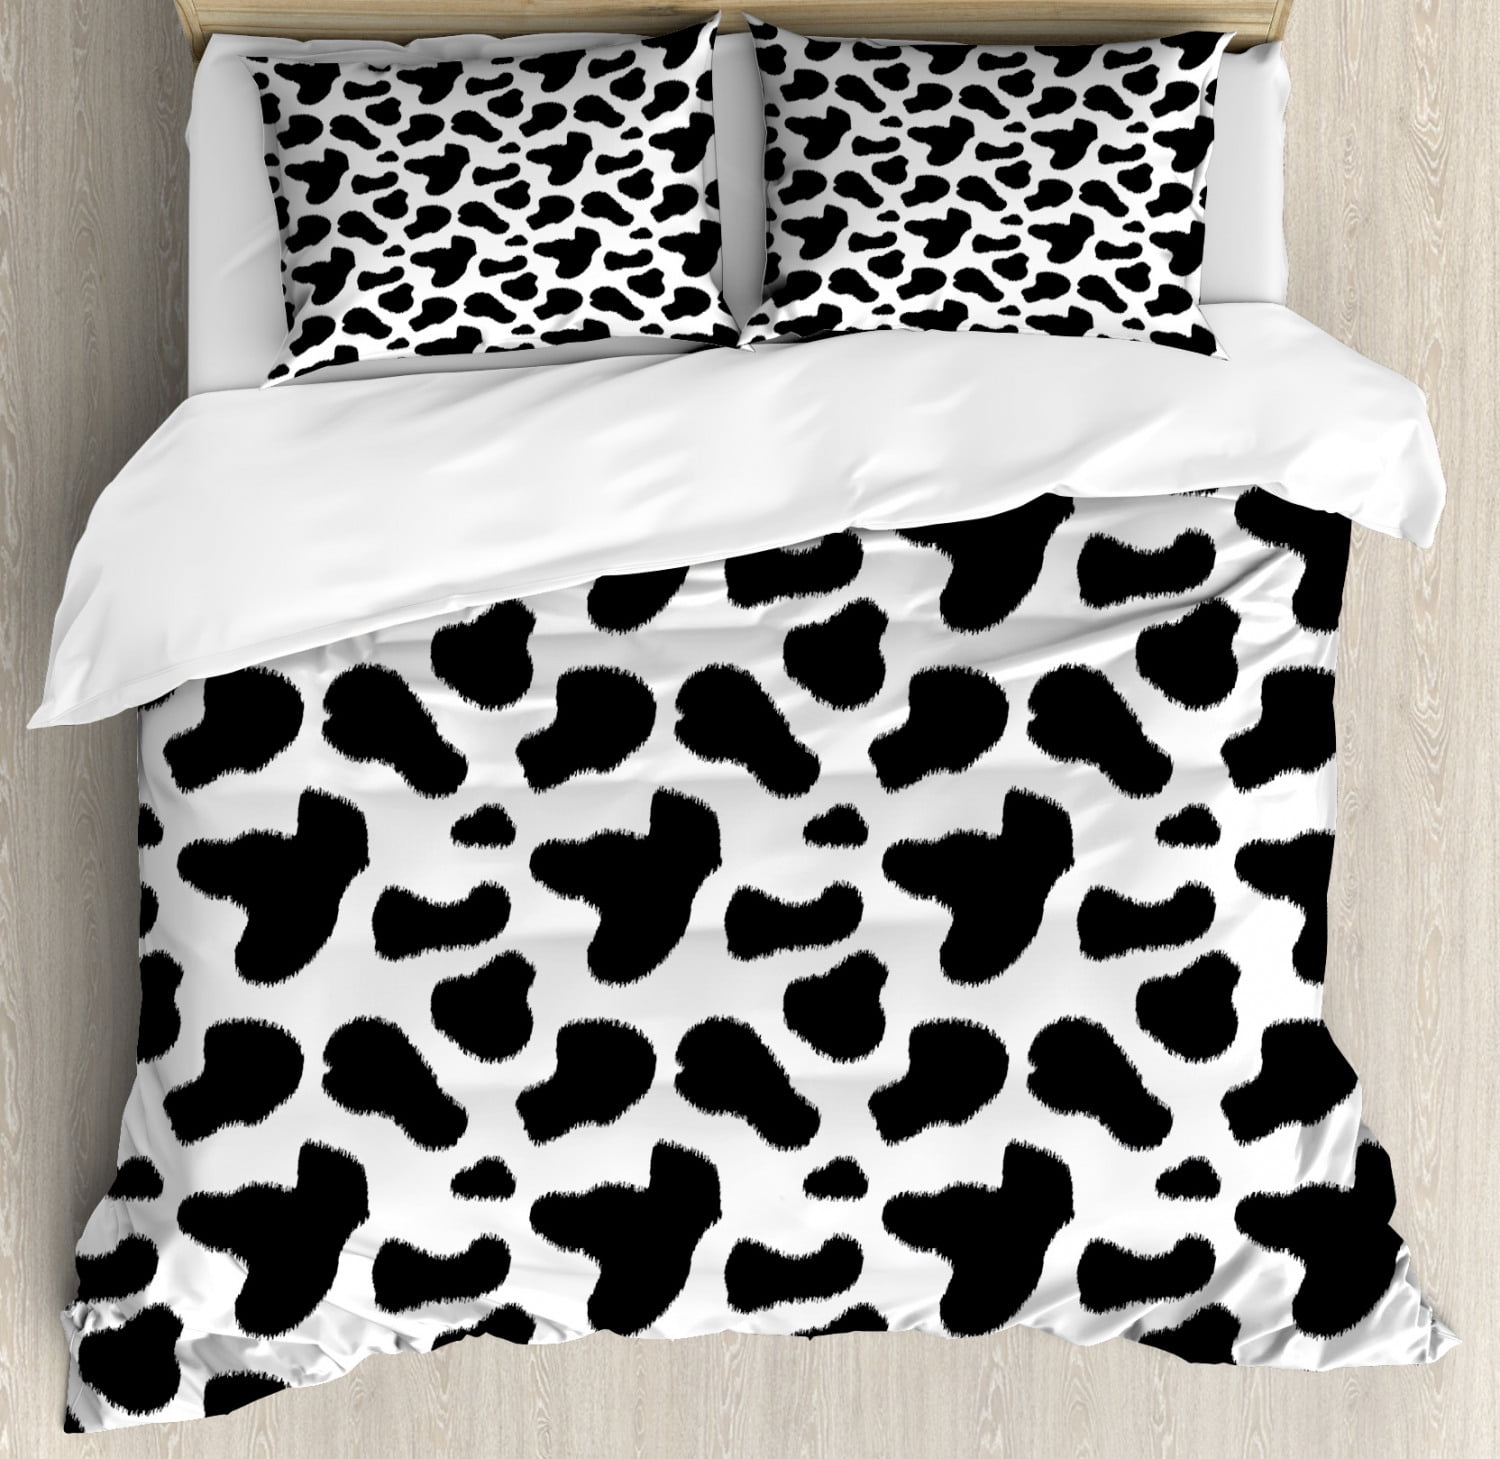 Cow Duvet Cover Set Animal Print Quilt Cover Set Single Double King 